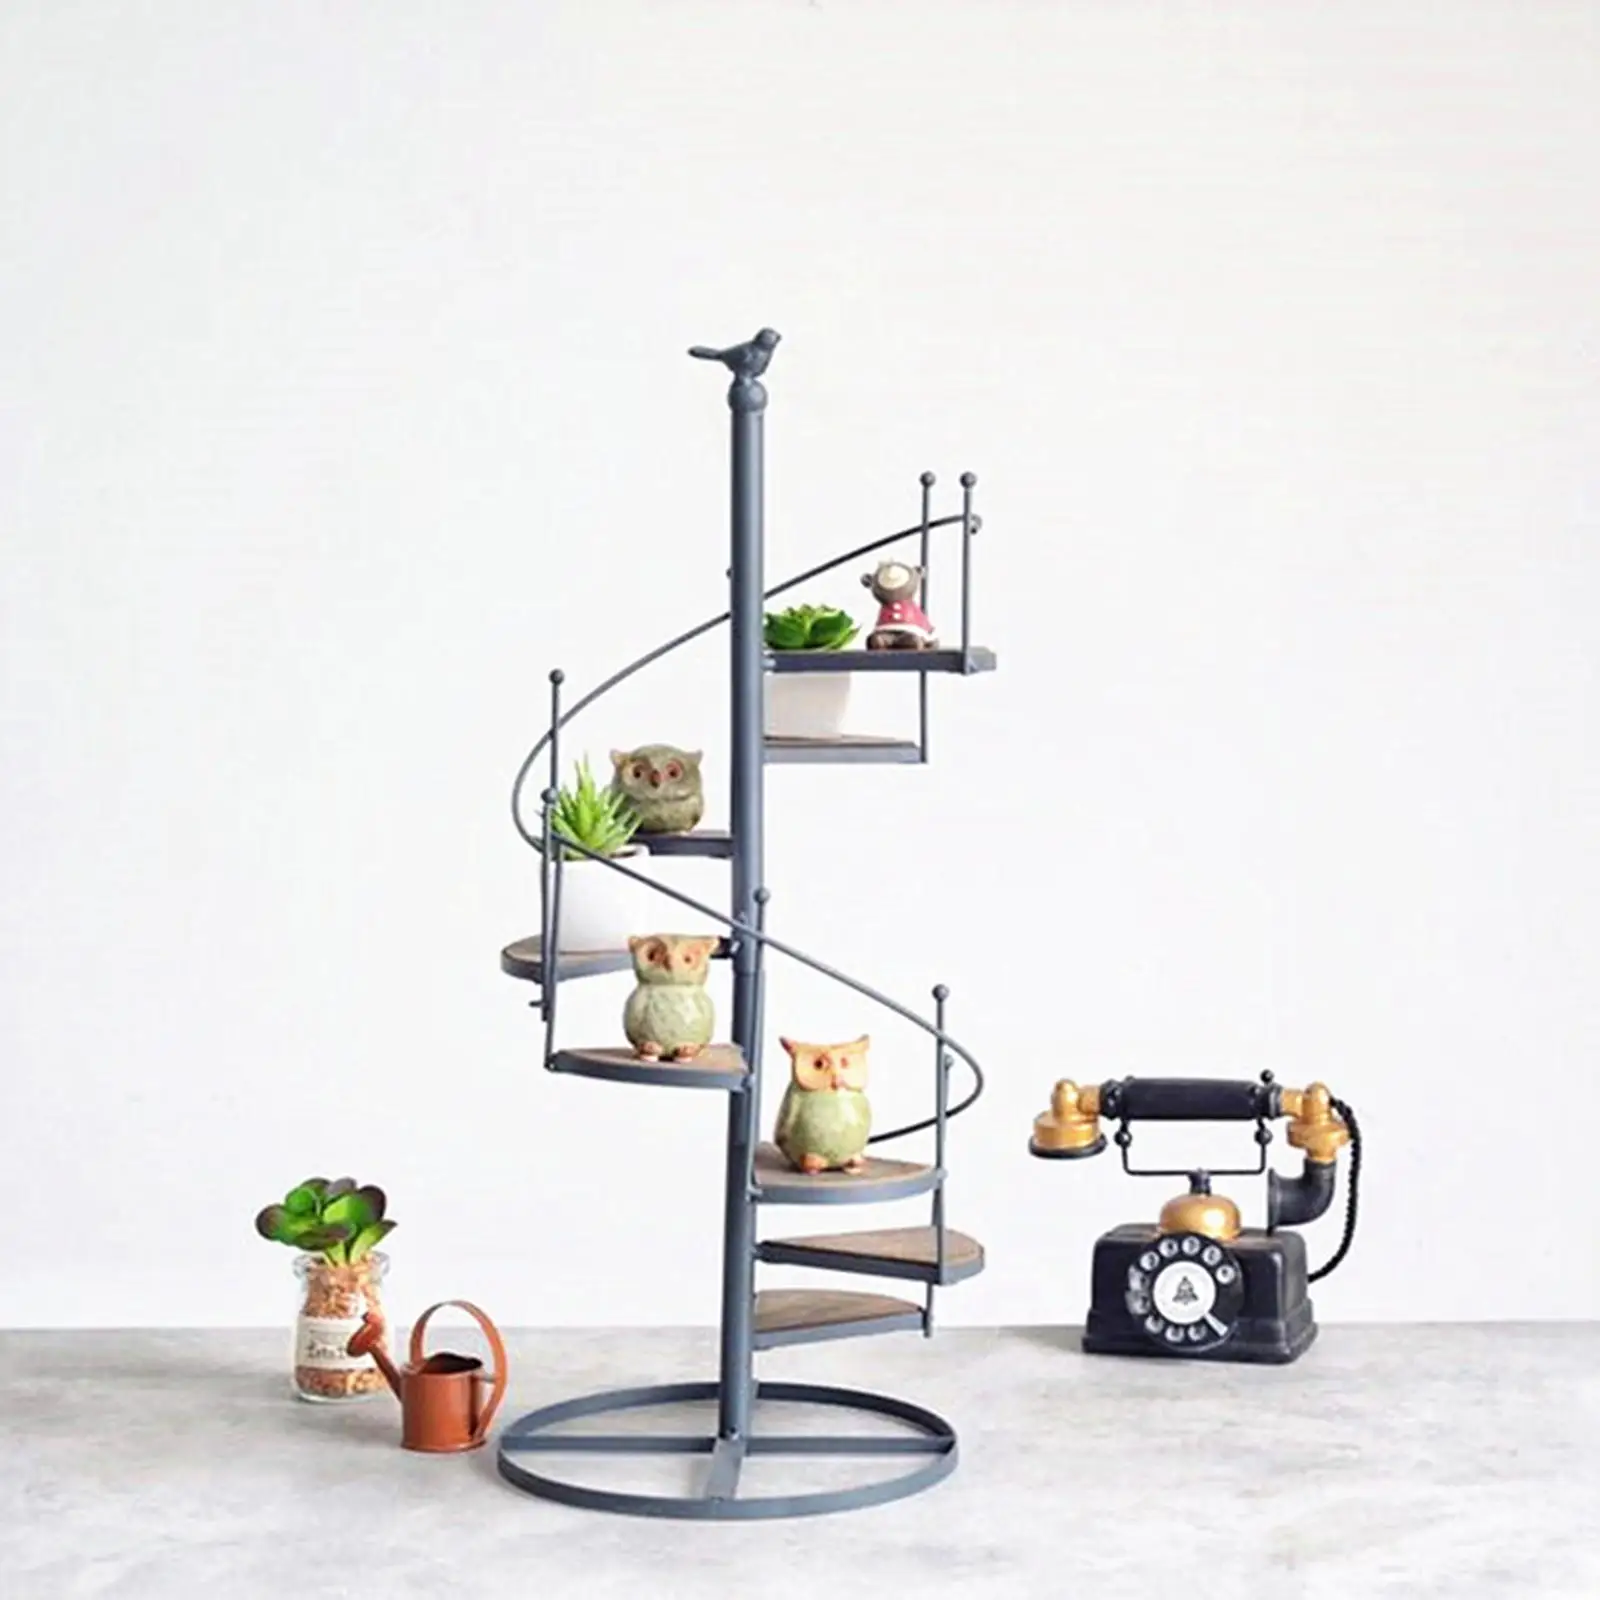 Rotating Ladder Design Spiral Plant Stand Iron Flower Pot Holder Shelf Space Saving Flower Pot Rack Display Home Garden Decor